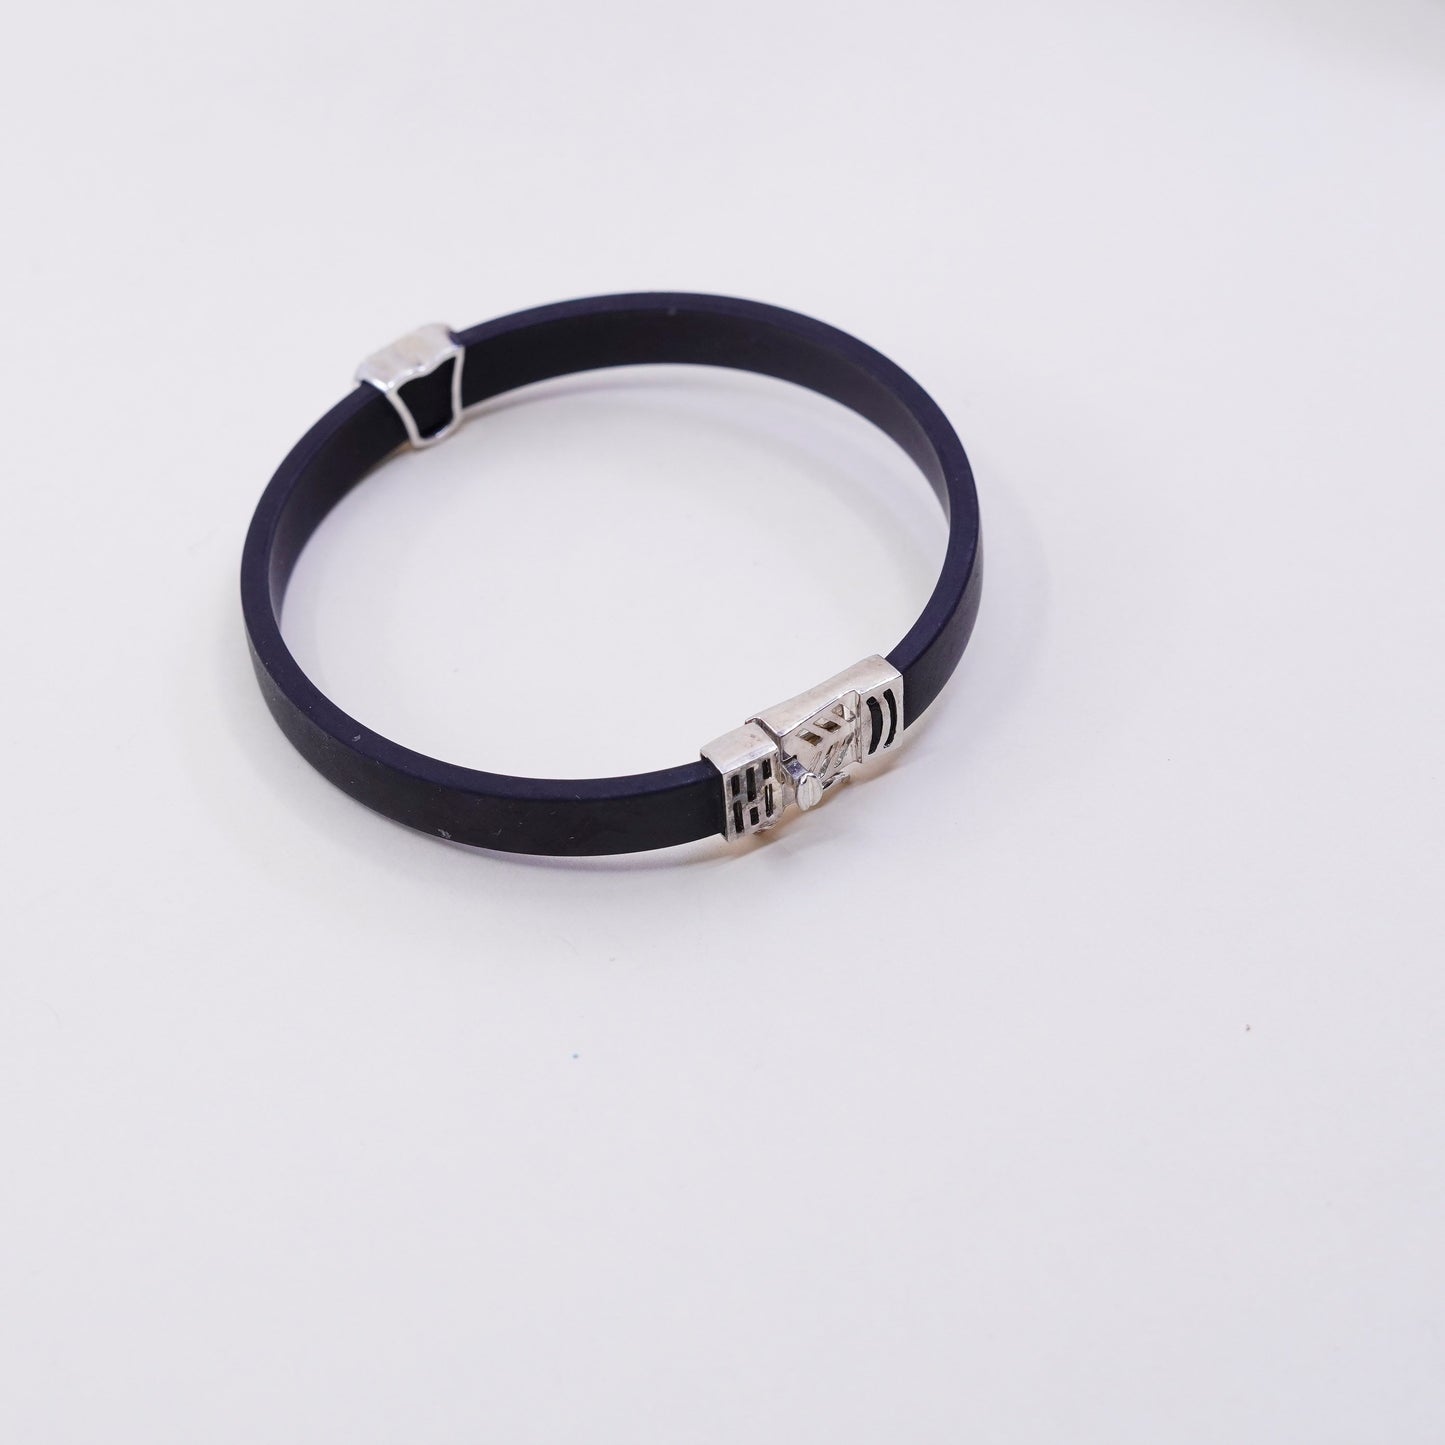 7”, Vintage black rubber bracelet with sterling 925 silver heart and cluster Cz